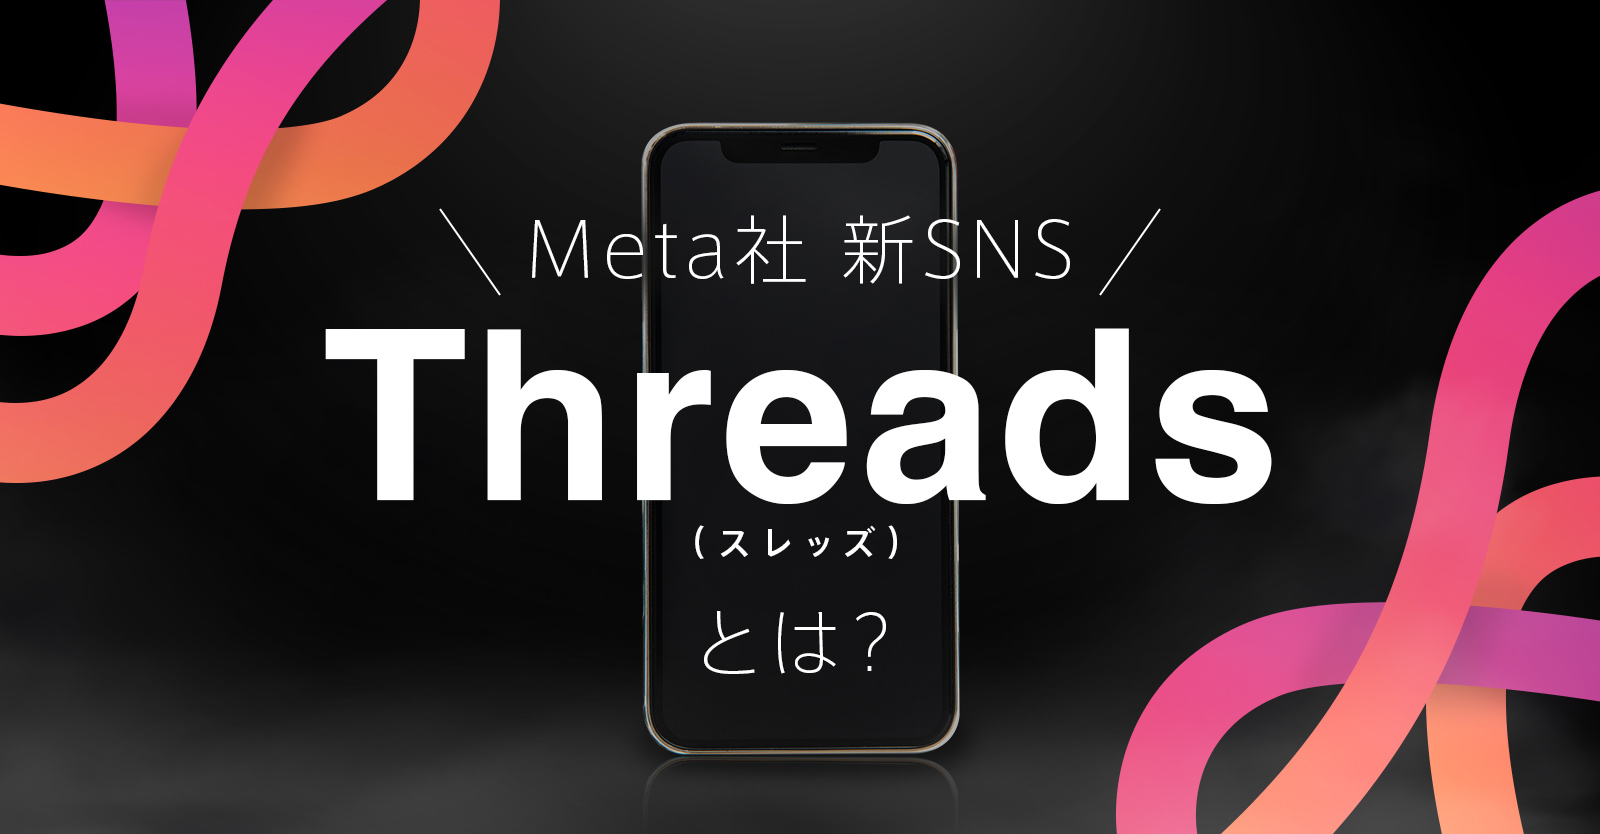 【Threads】メタの新SNS「スレッズ」、4時間で登録者500万人突破 ！！！！！！！！！！